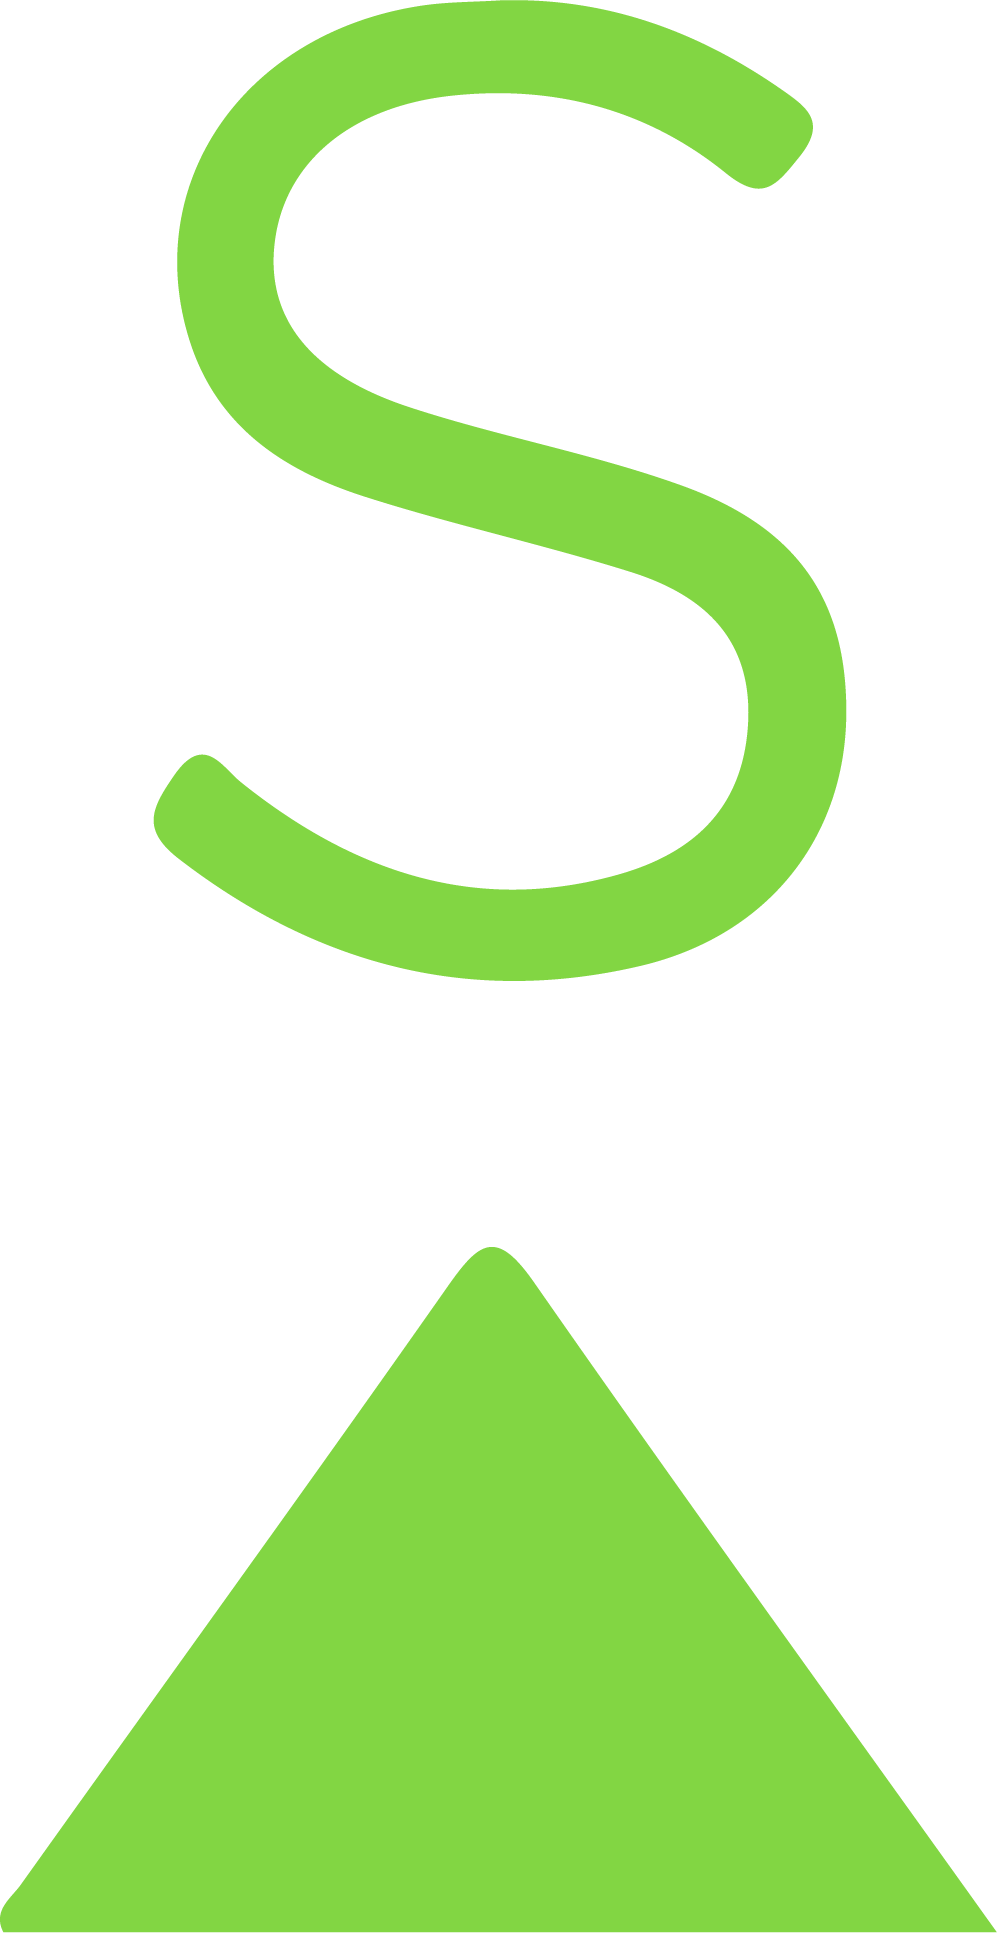 ServiceSource logo (transparent PNG)